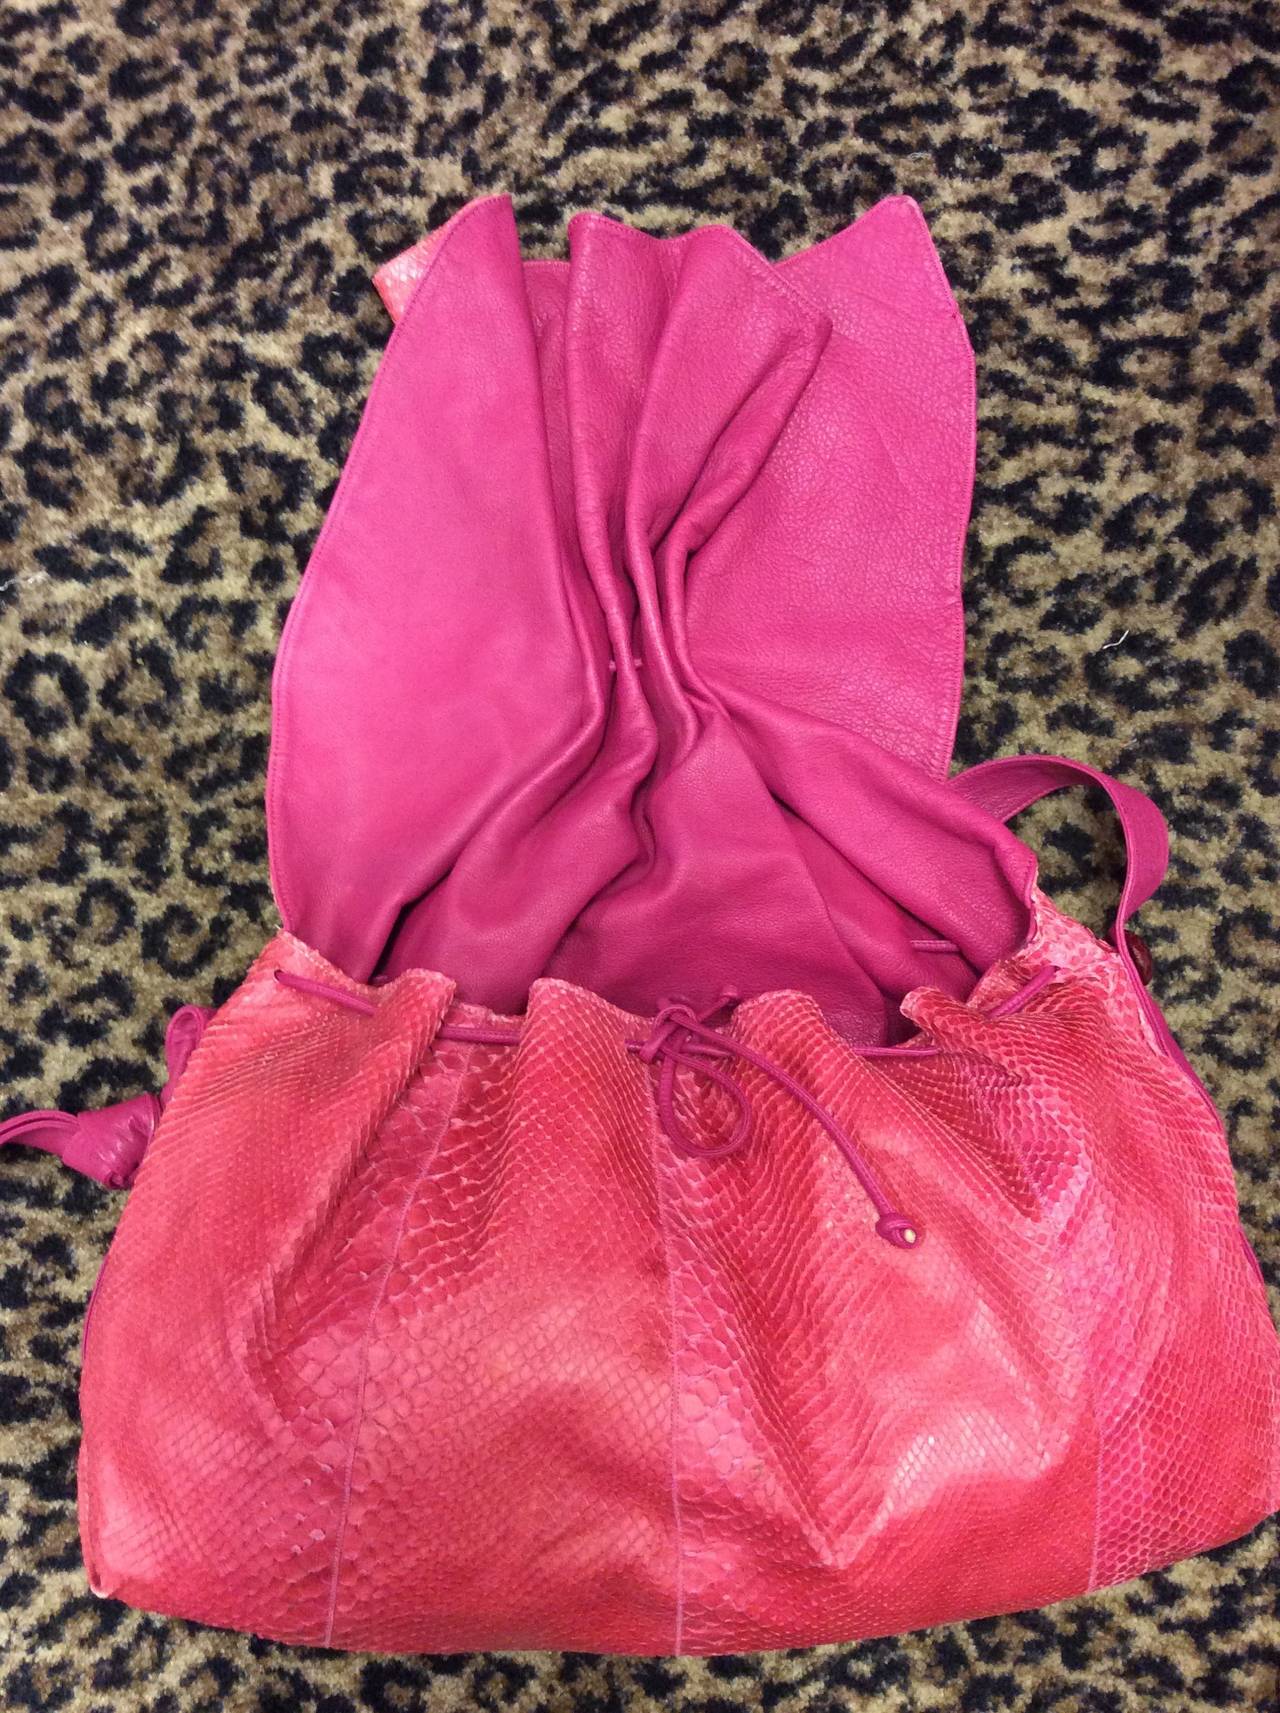 Vintage Gigantic Carlos Falchi Pink Python Snakeskin Flap Crossbody Handbag For Sale 2